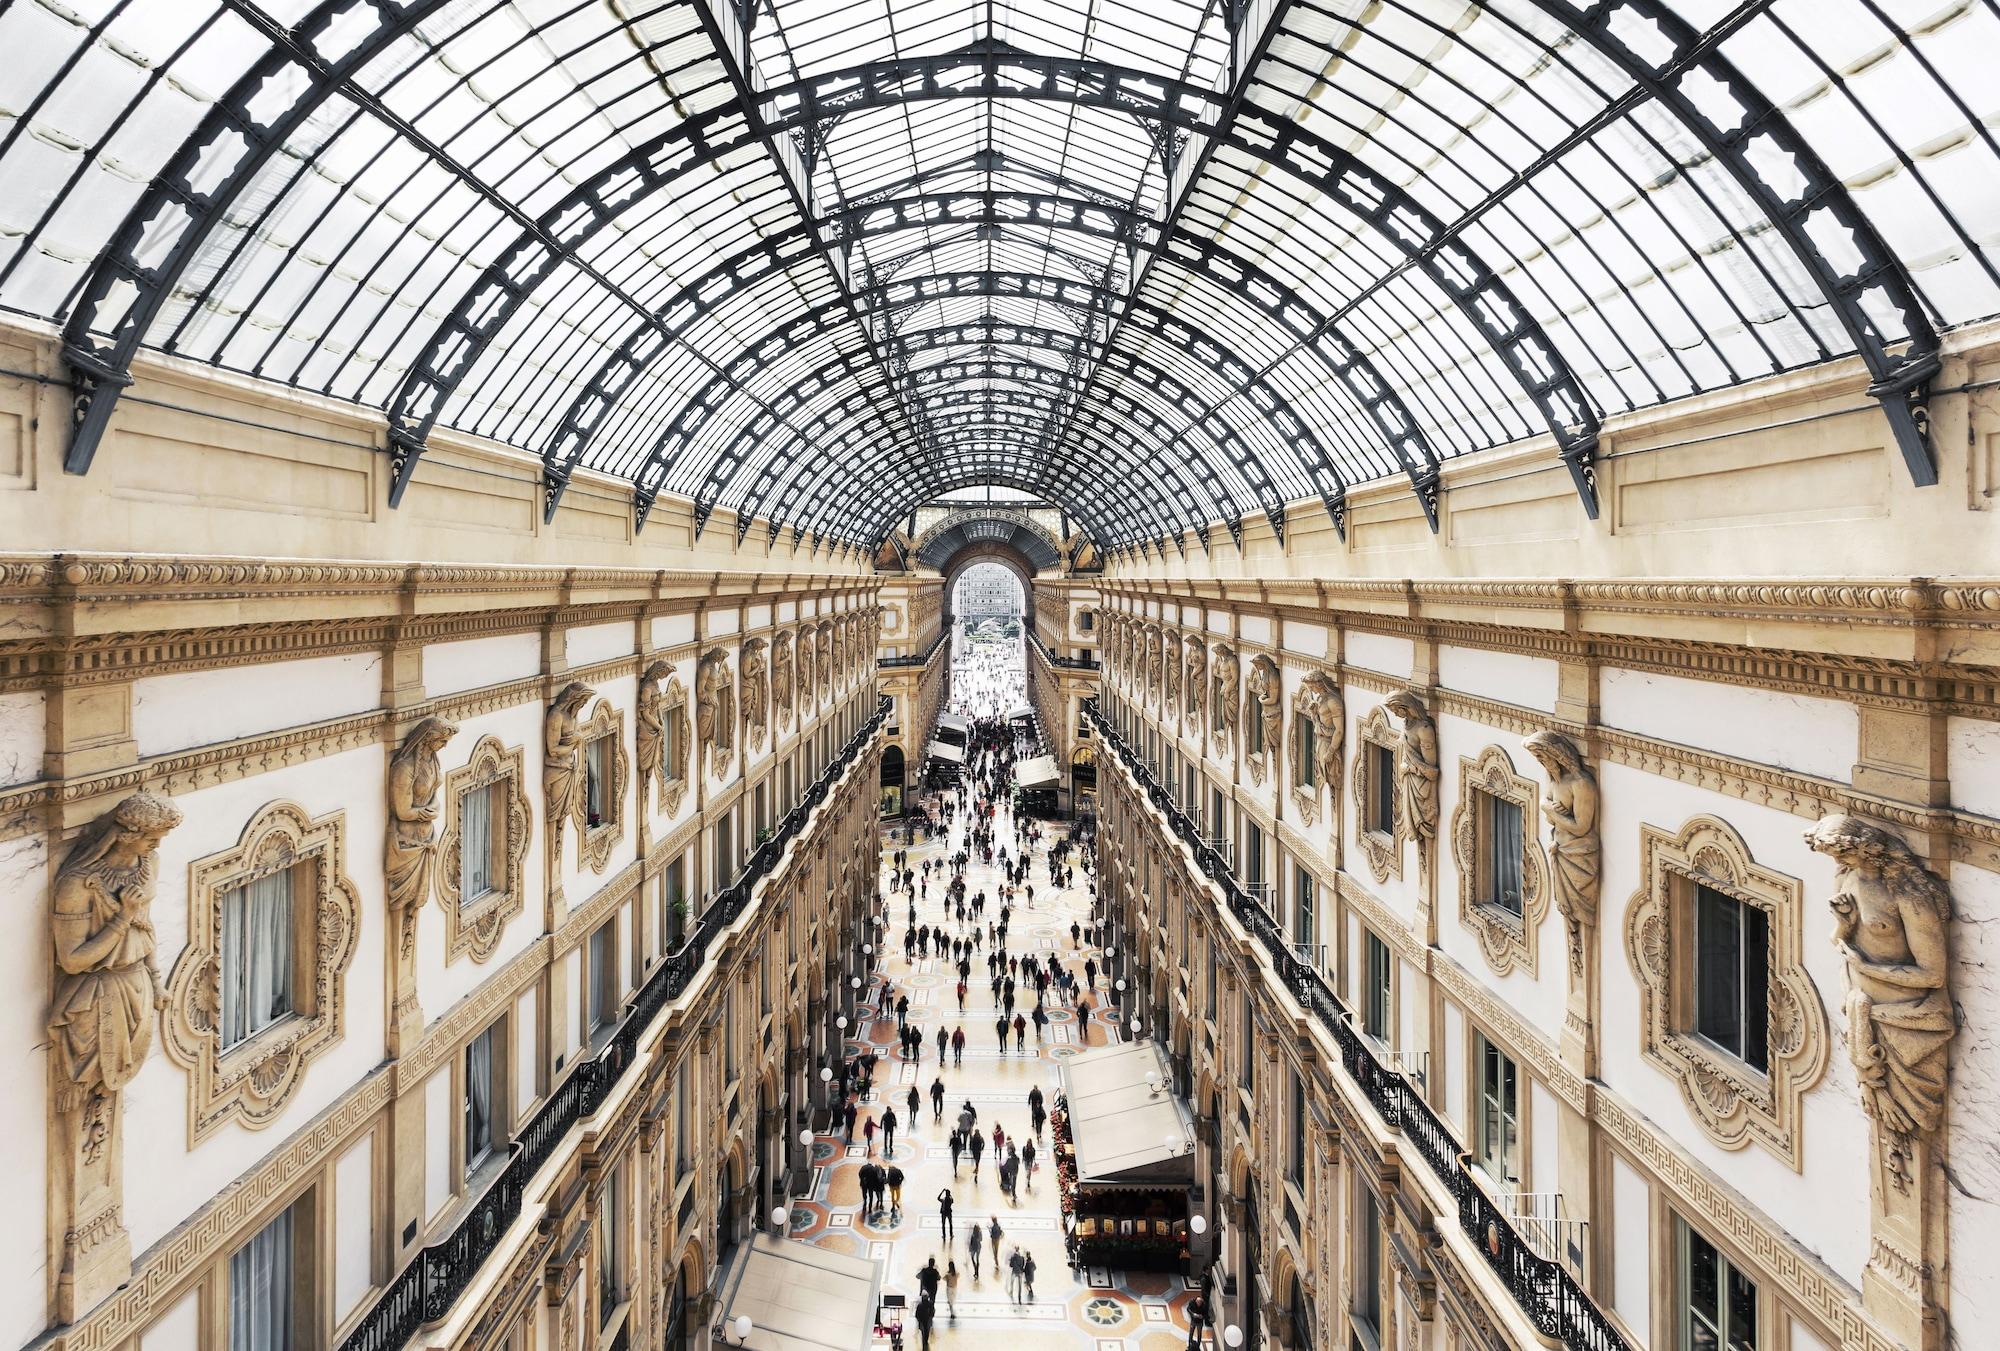 Galleria Vik Milano Dış mekan fotoğraf